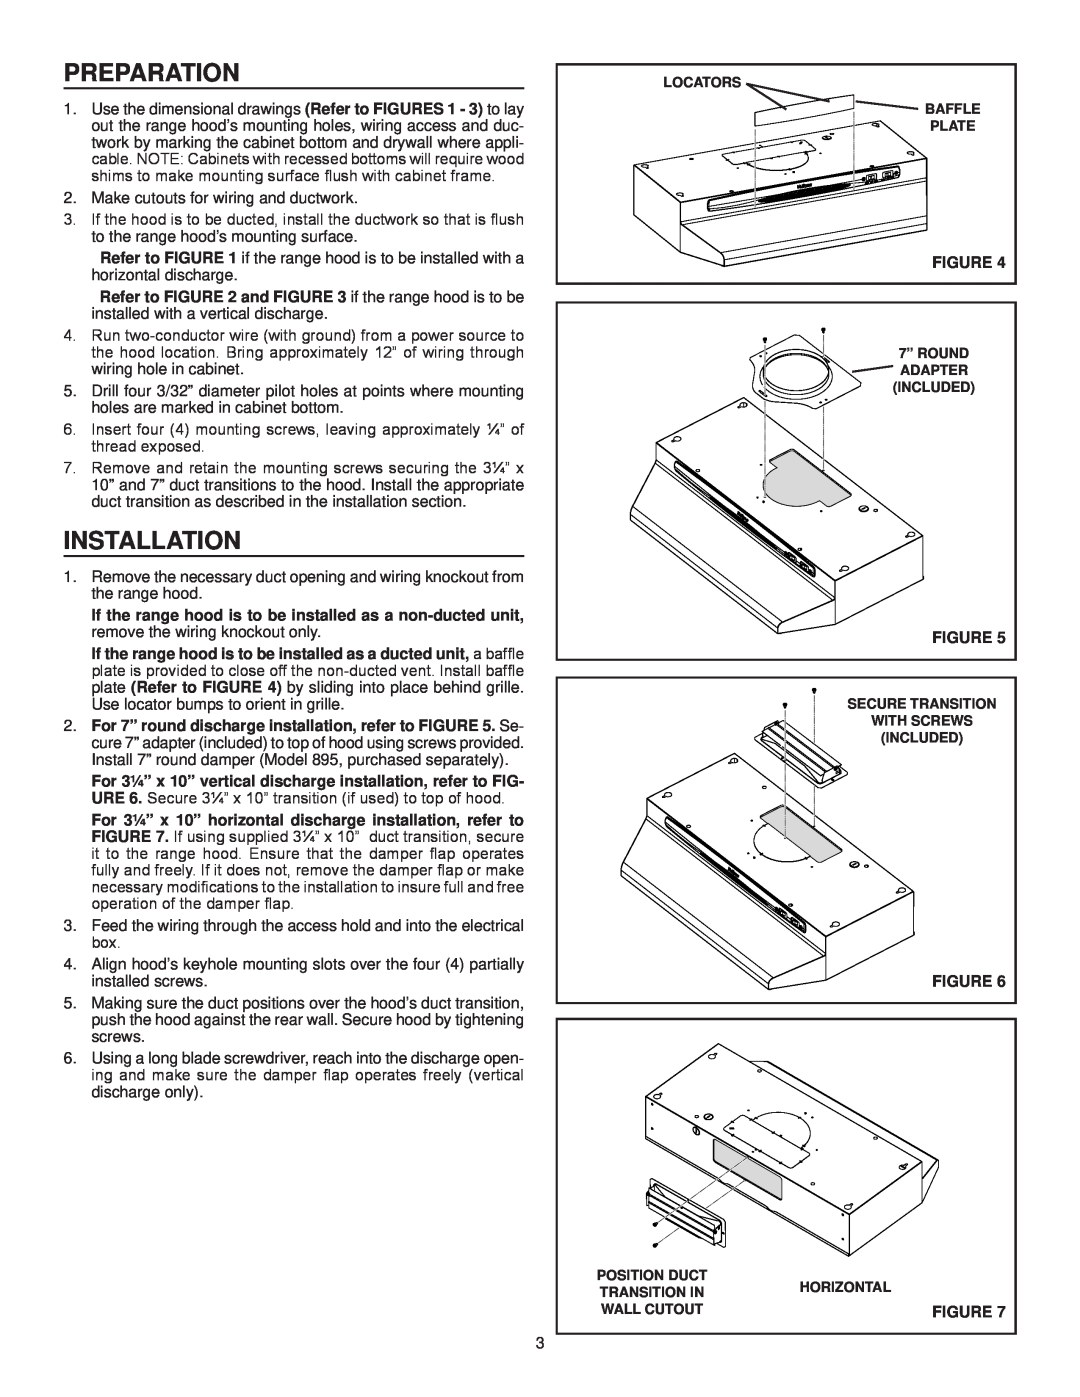 NuTone NS6500 Series installation instructions Preparation, Installation, Figure 